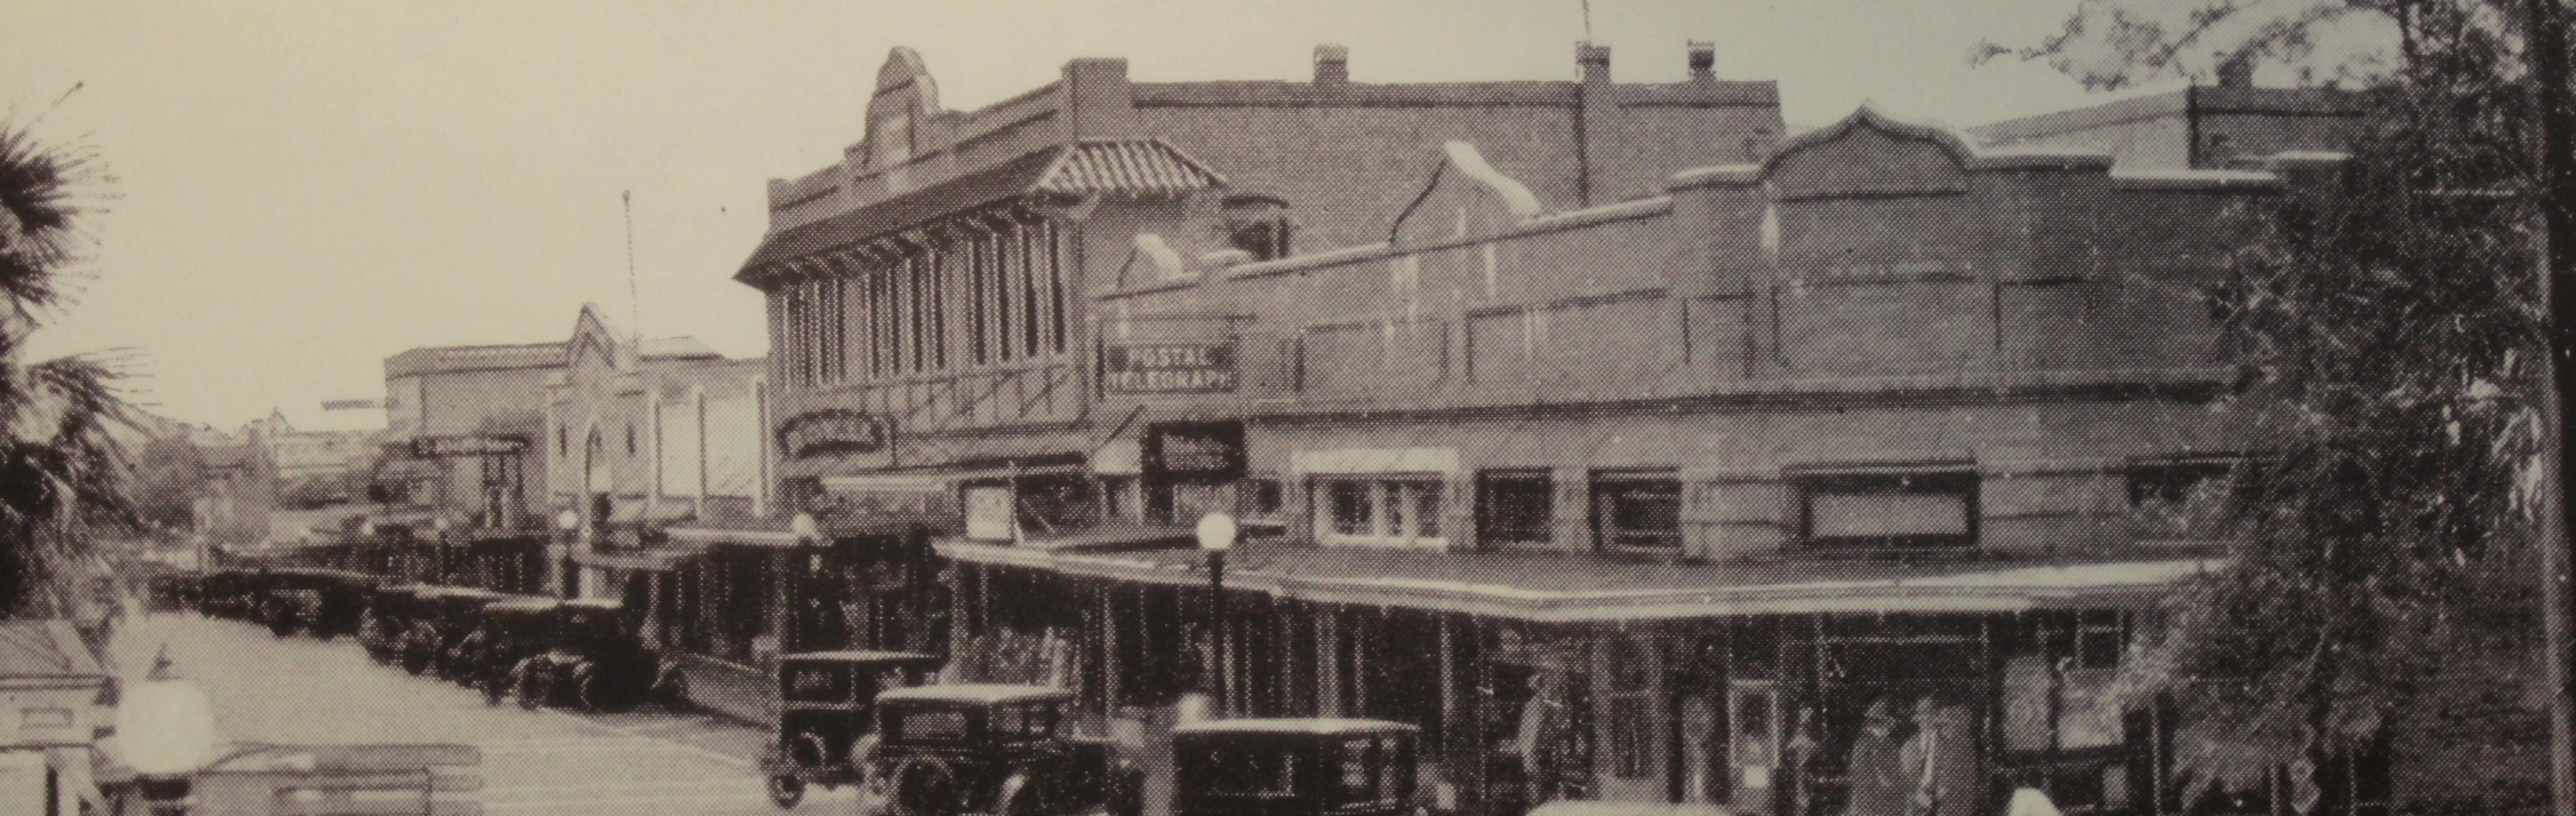 Image of historic Tarpon Avenue